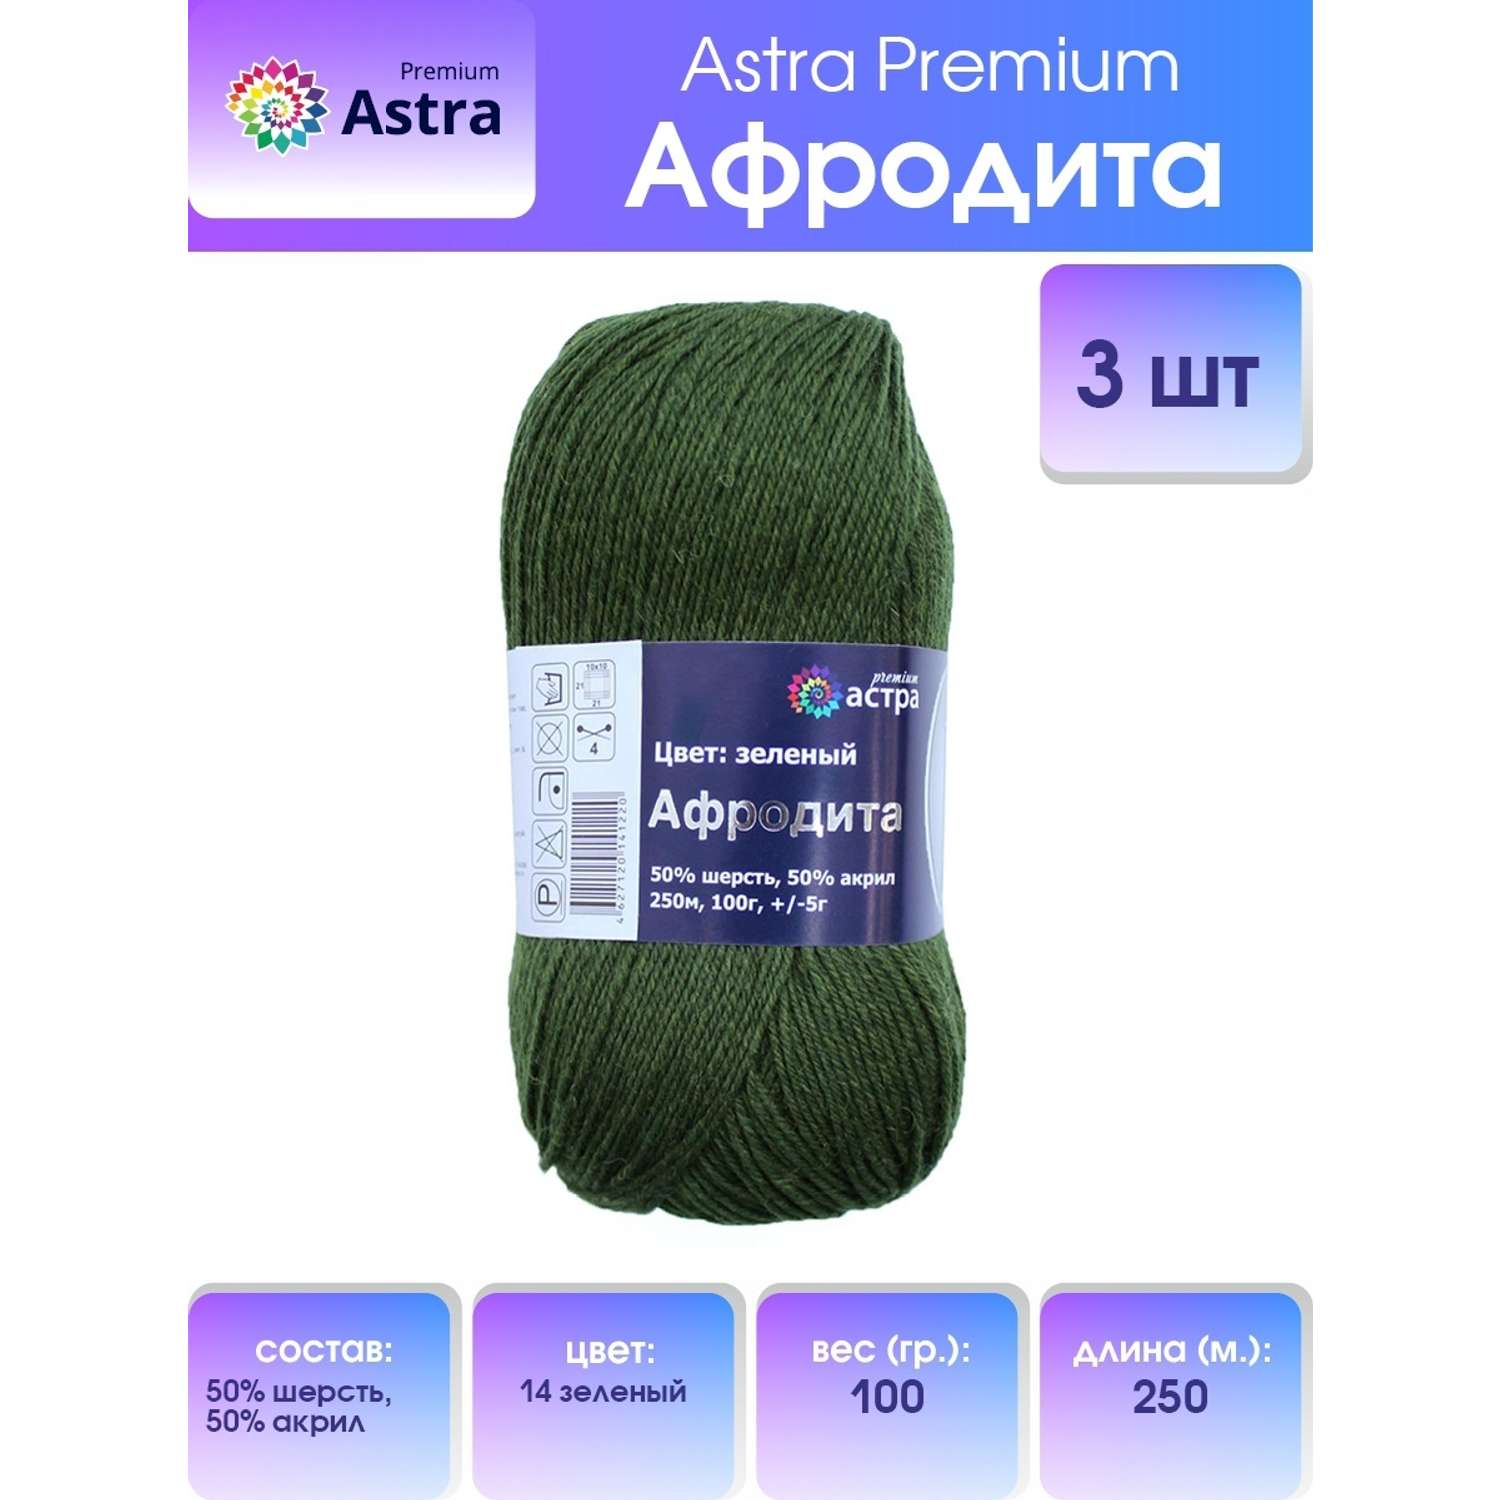 Пряжа Astra Premium Афродита полушерстяная 100 г 250 м 01 14 зеленый 3 мотка - фото 1